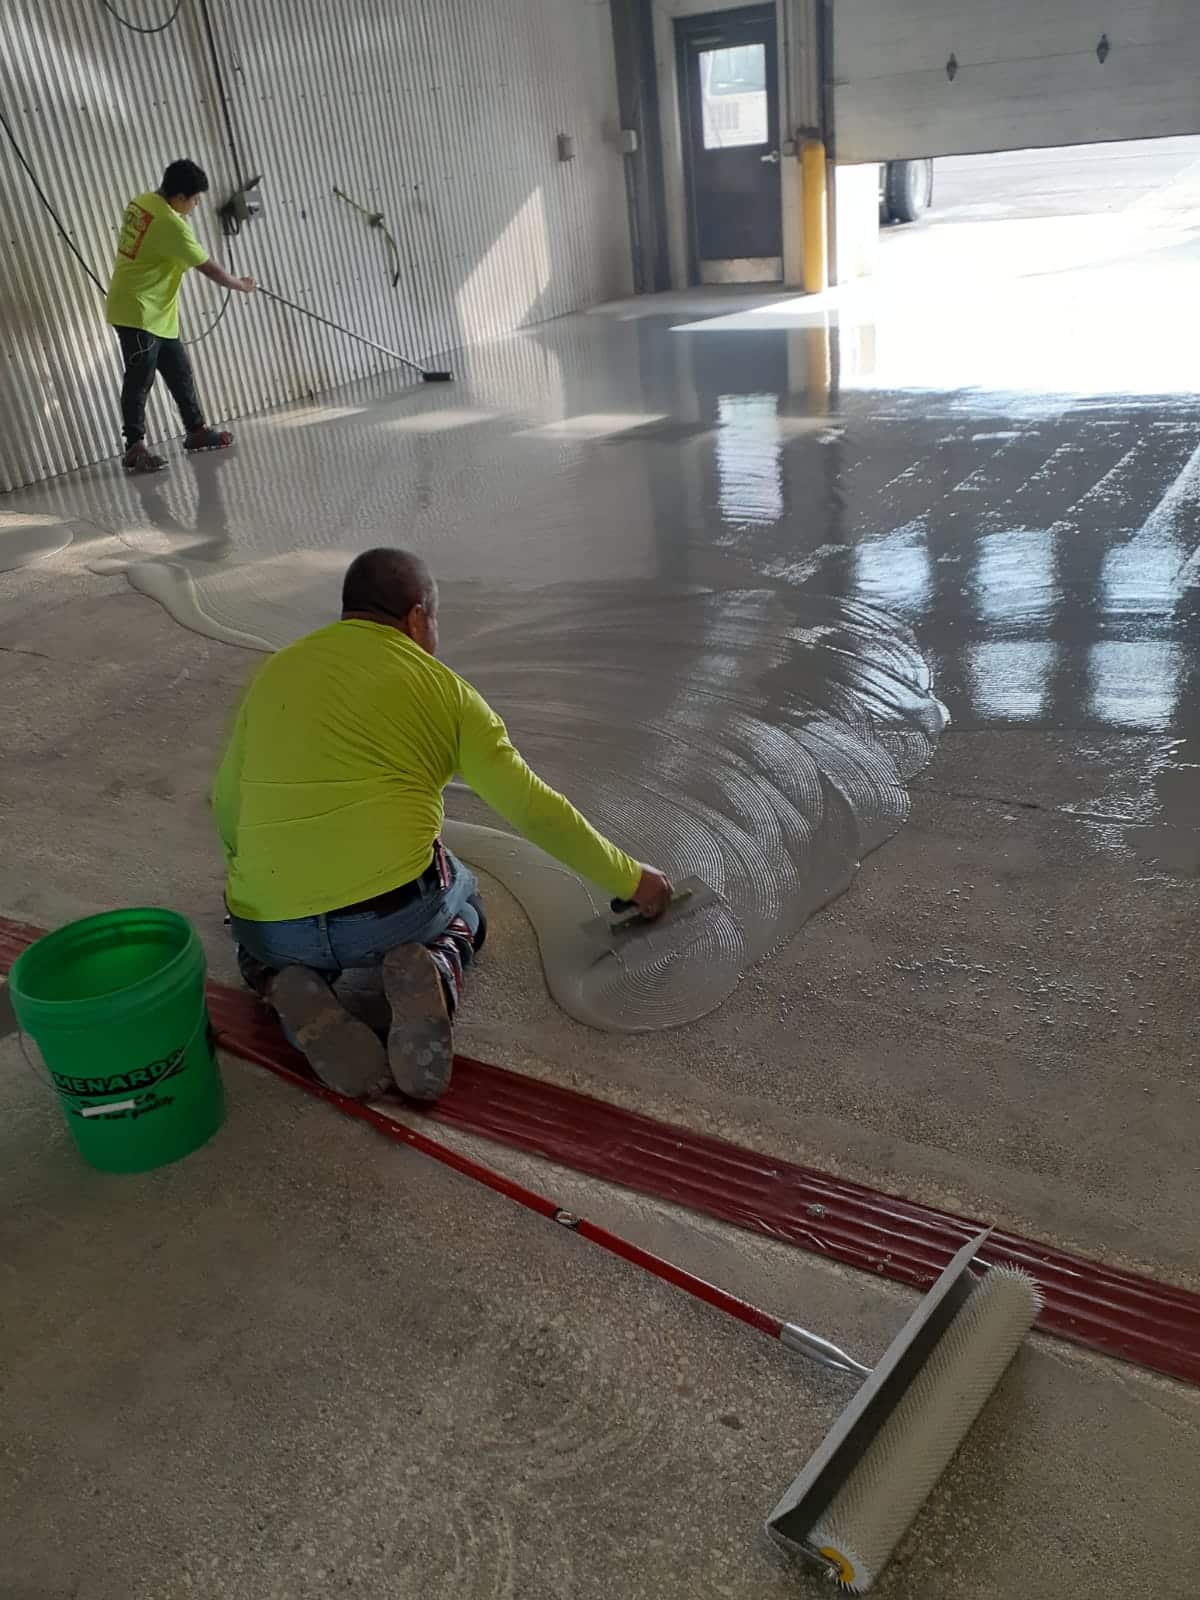 Urethane Cement Flooring by CustomCrete